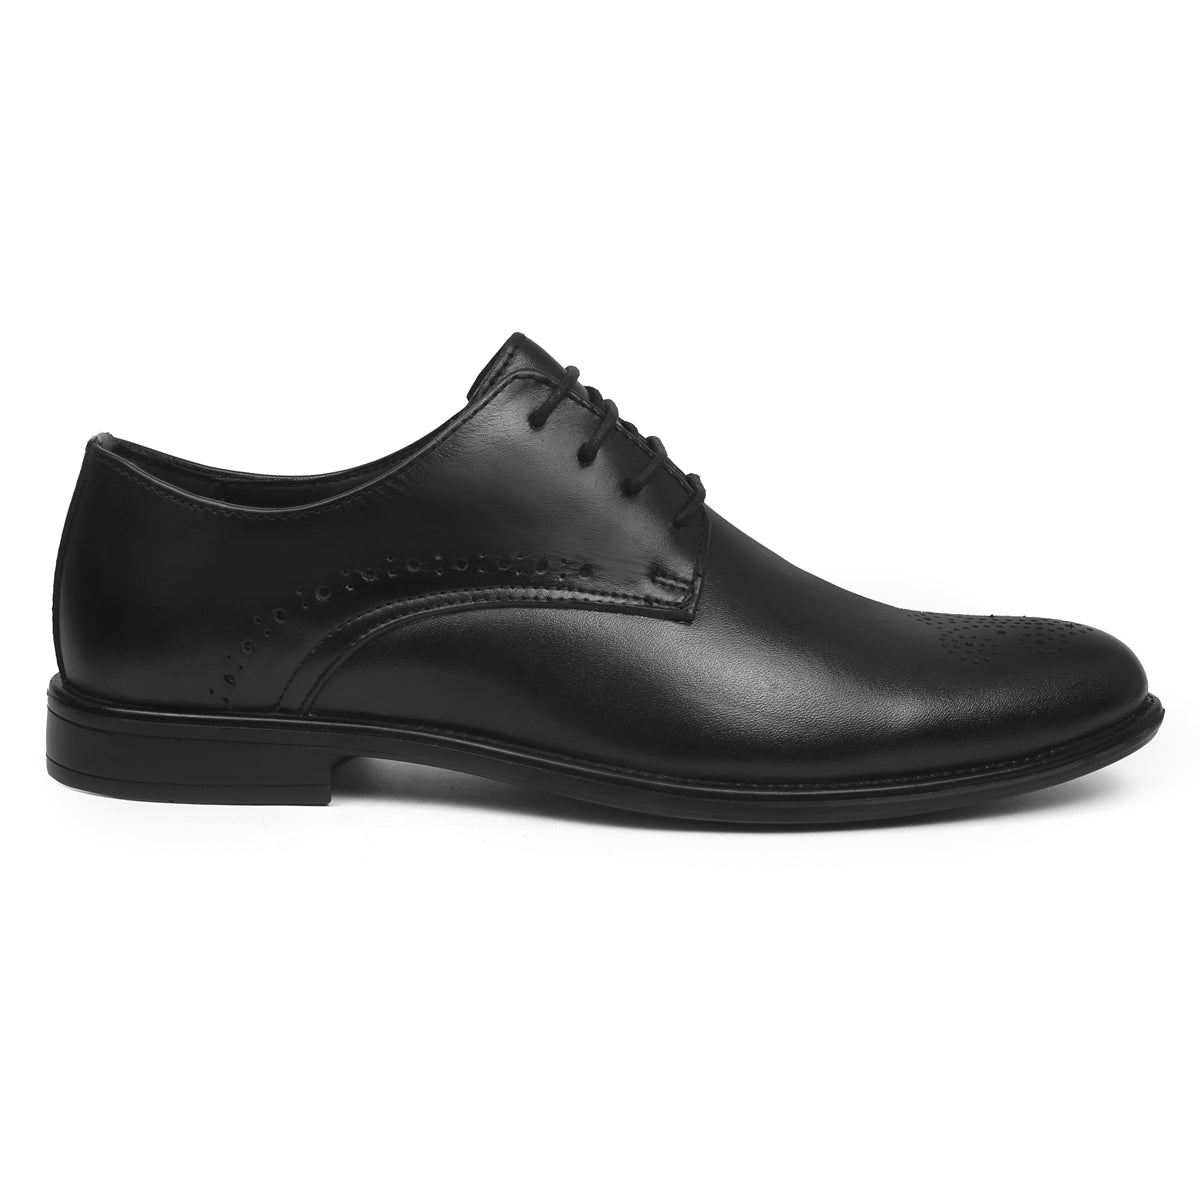 Formal Leather Shoes for Men PG-62